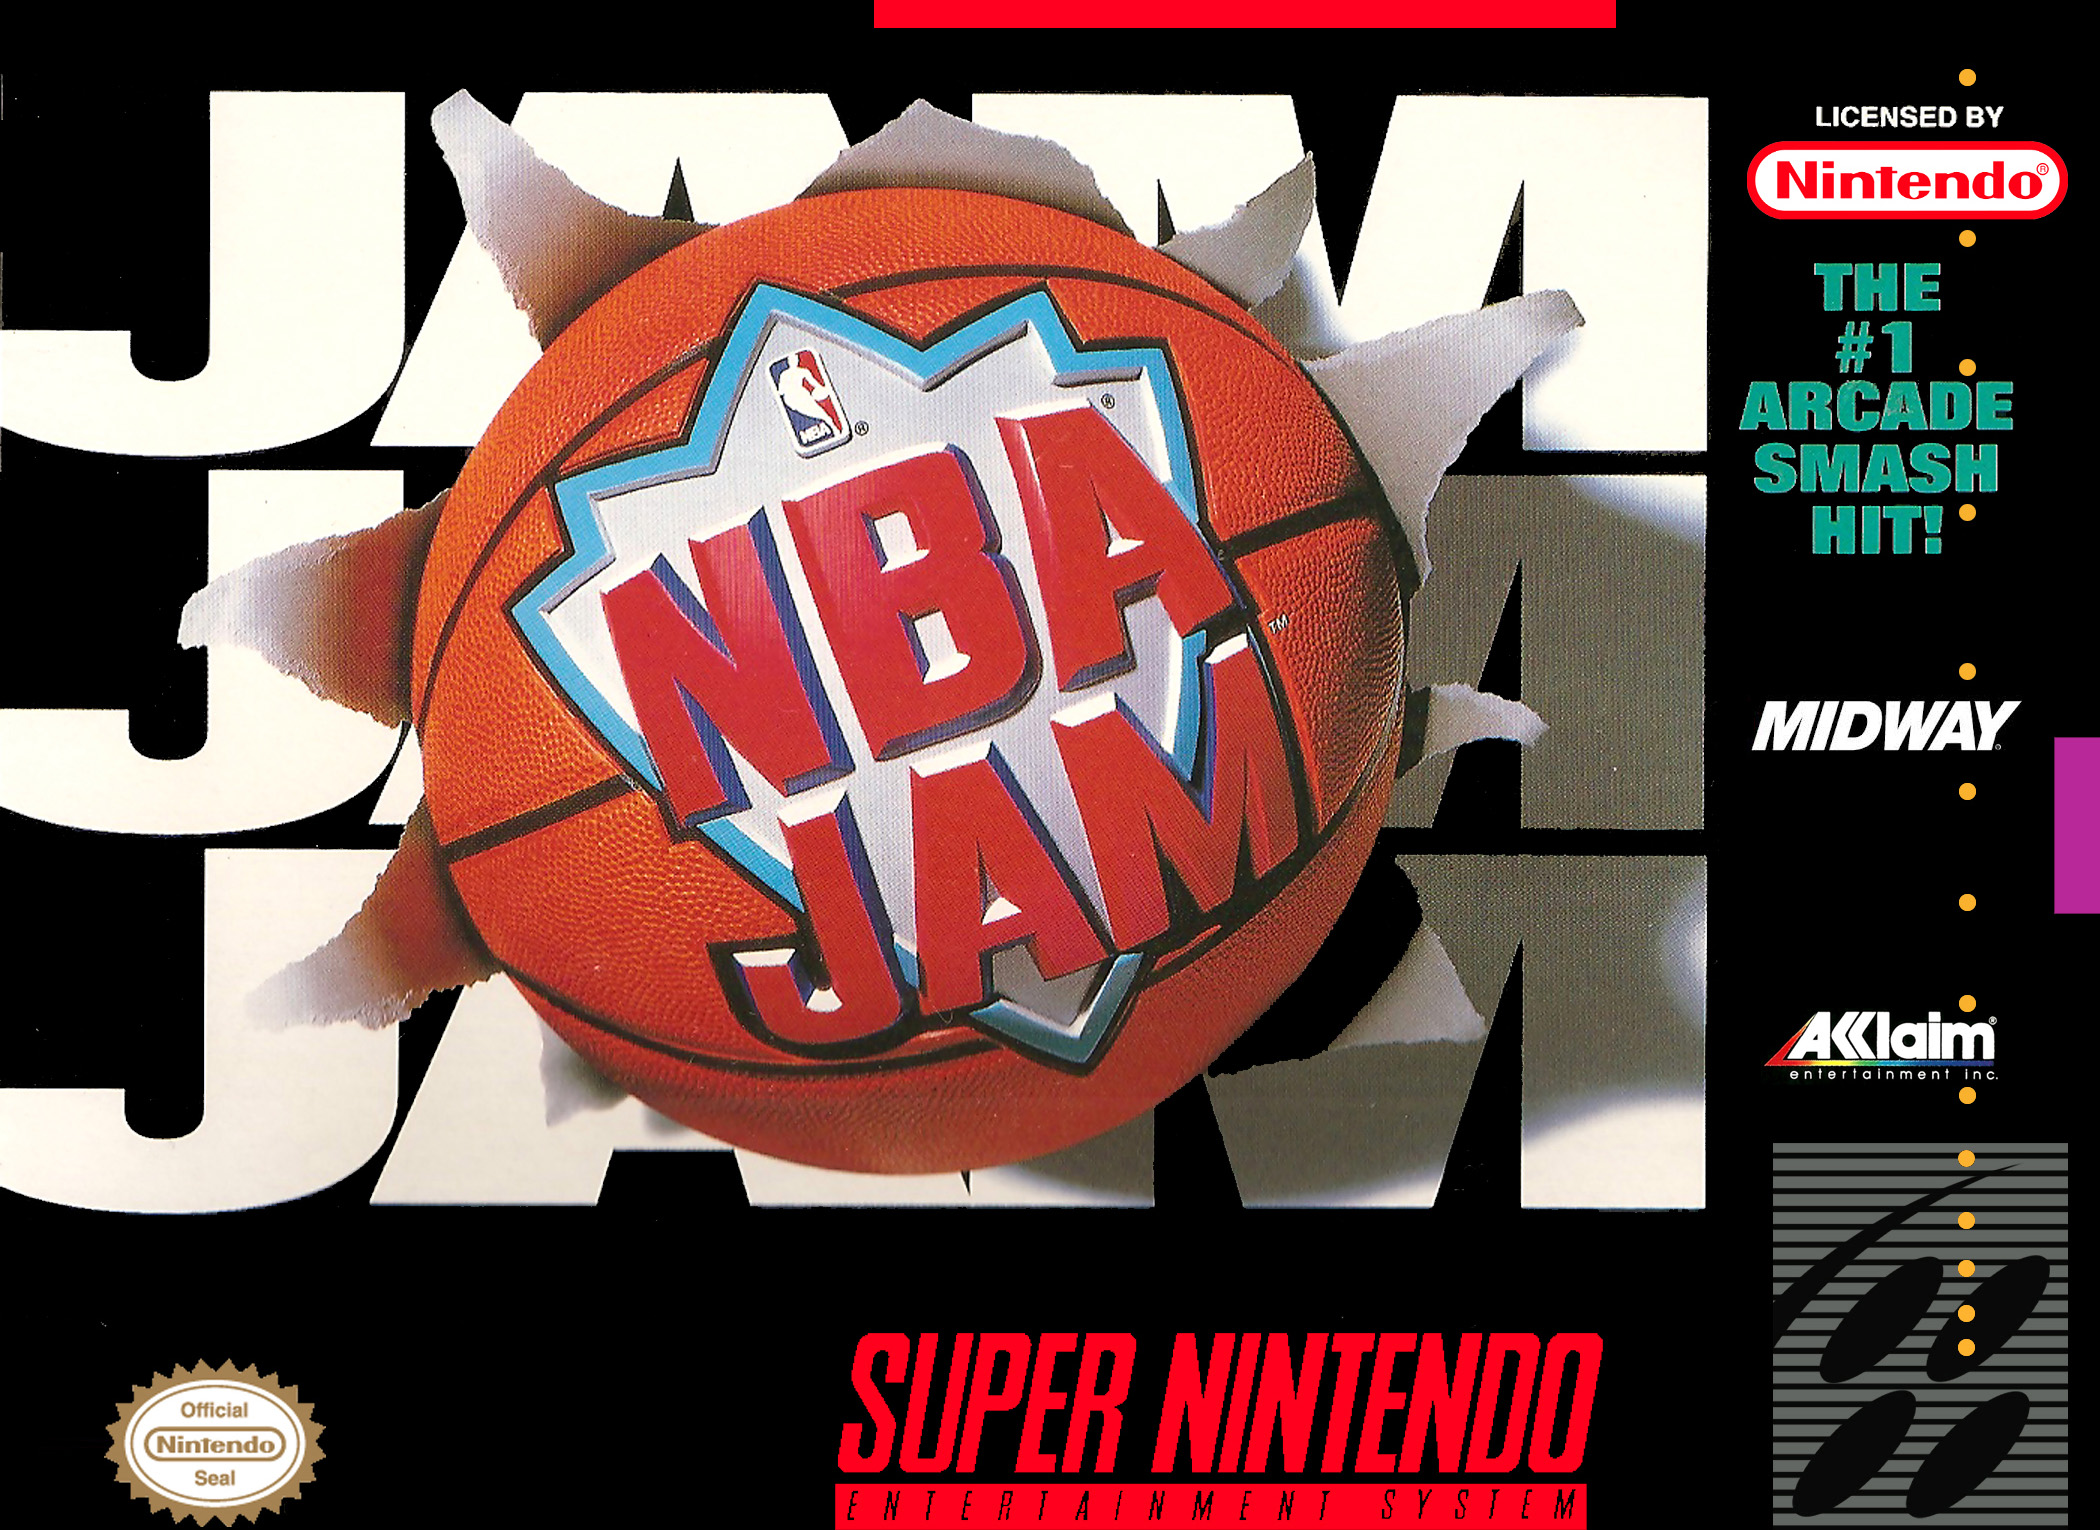 NBA Jam cover